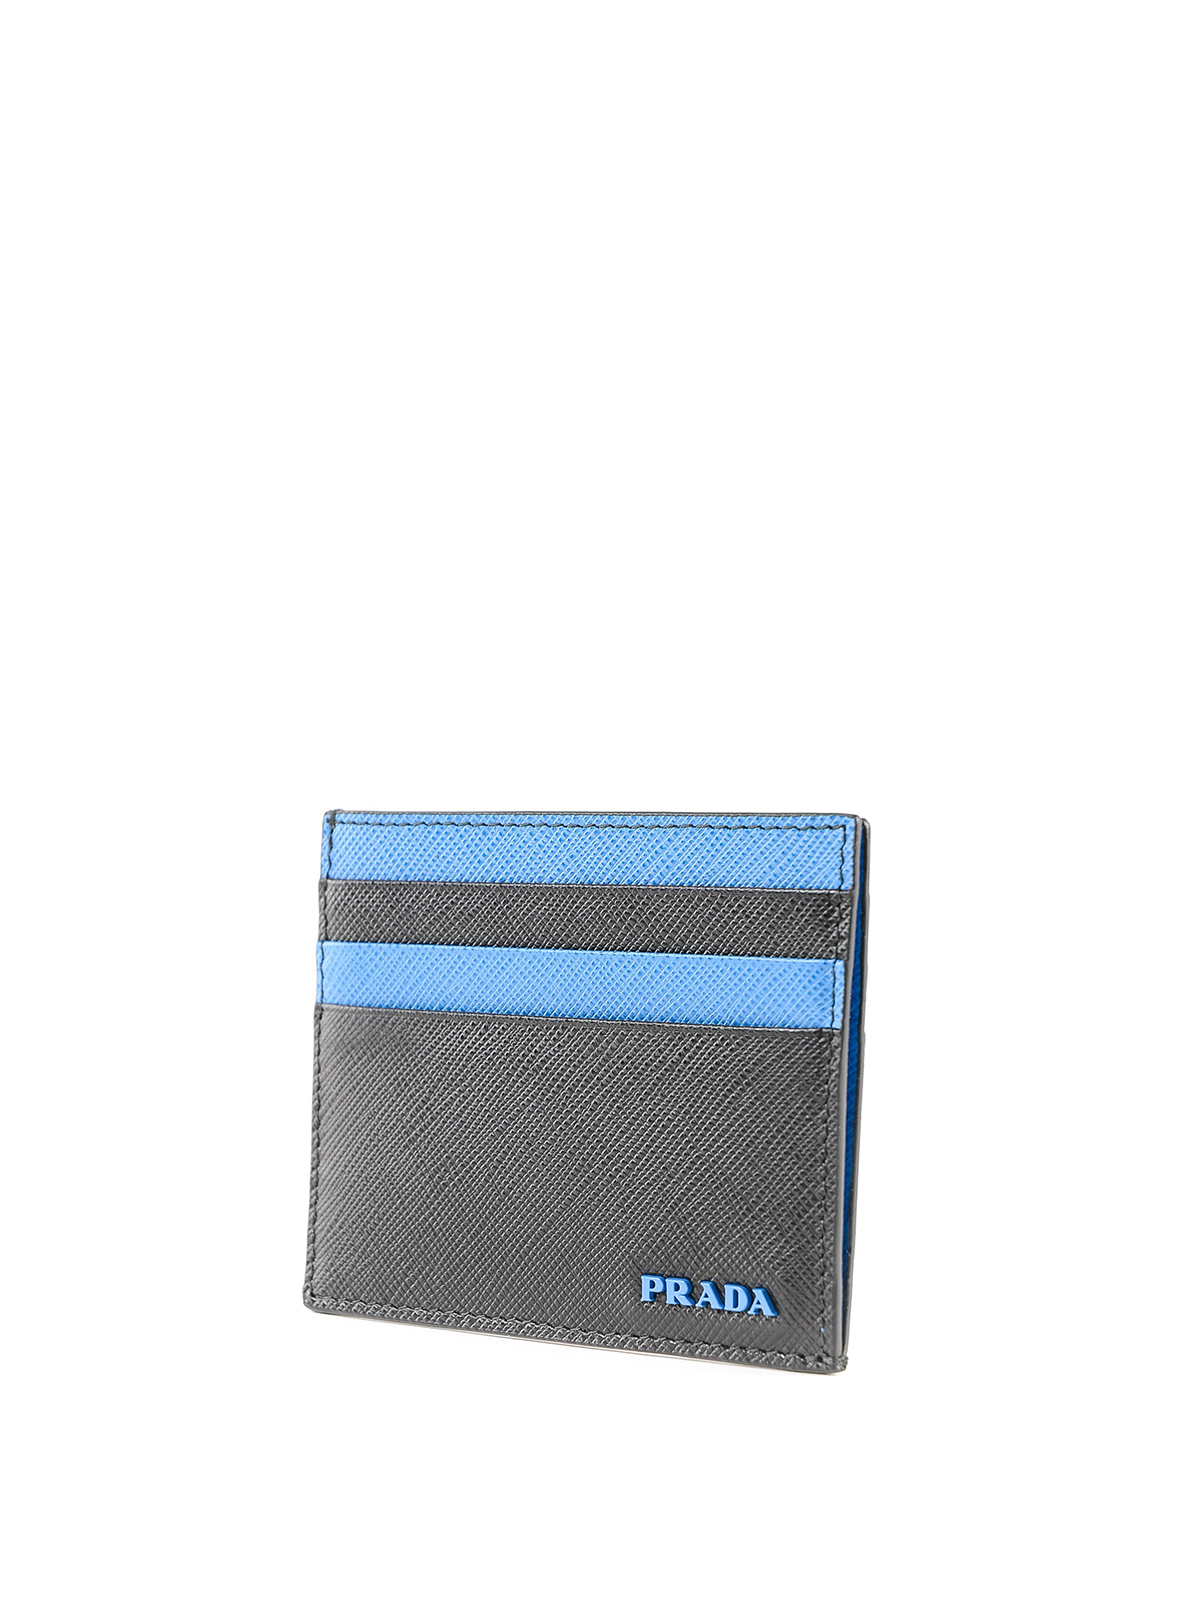 Prada Leather Card Holder - Black